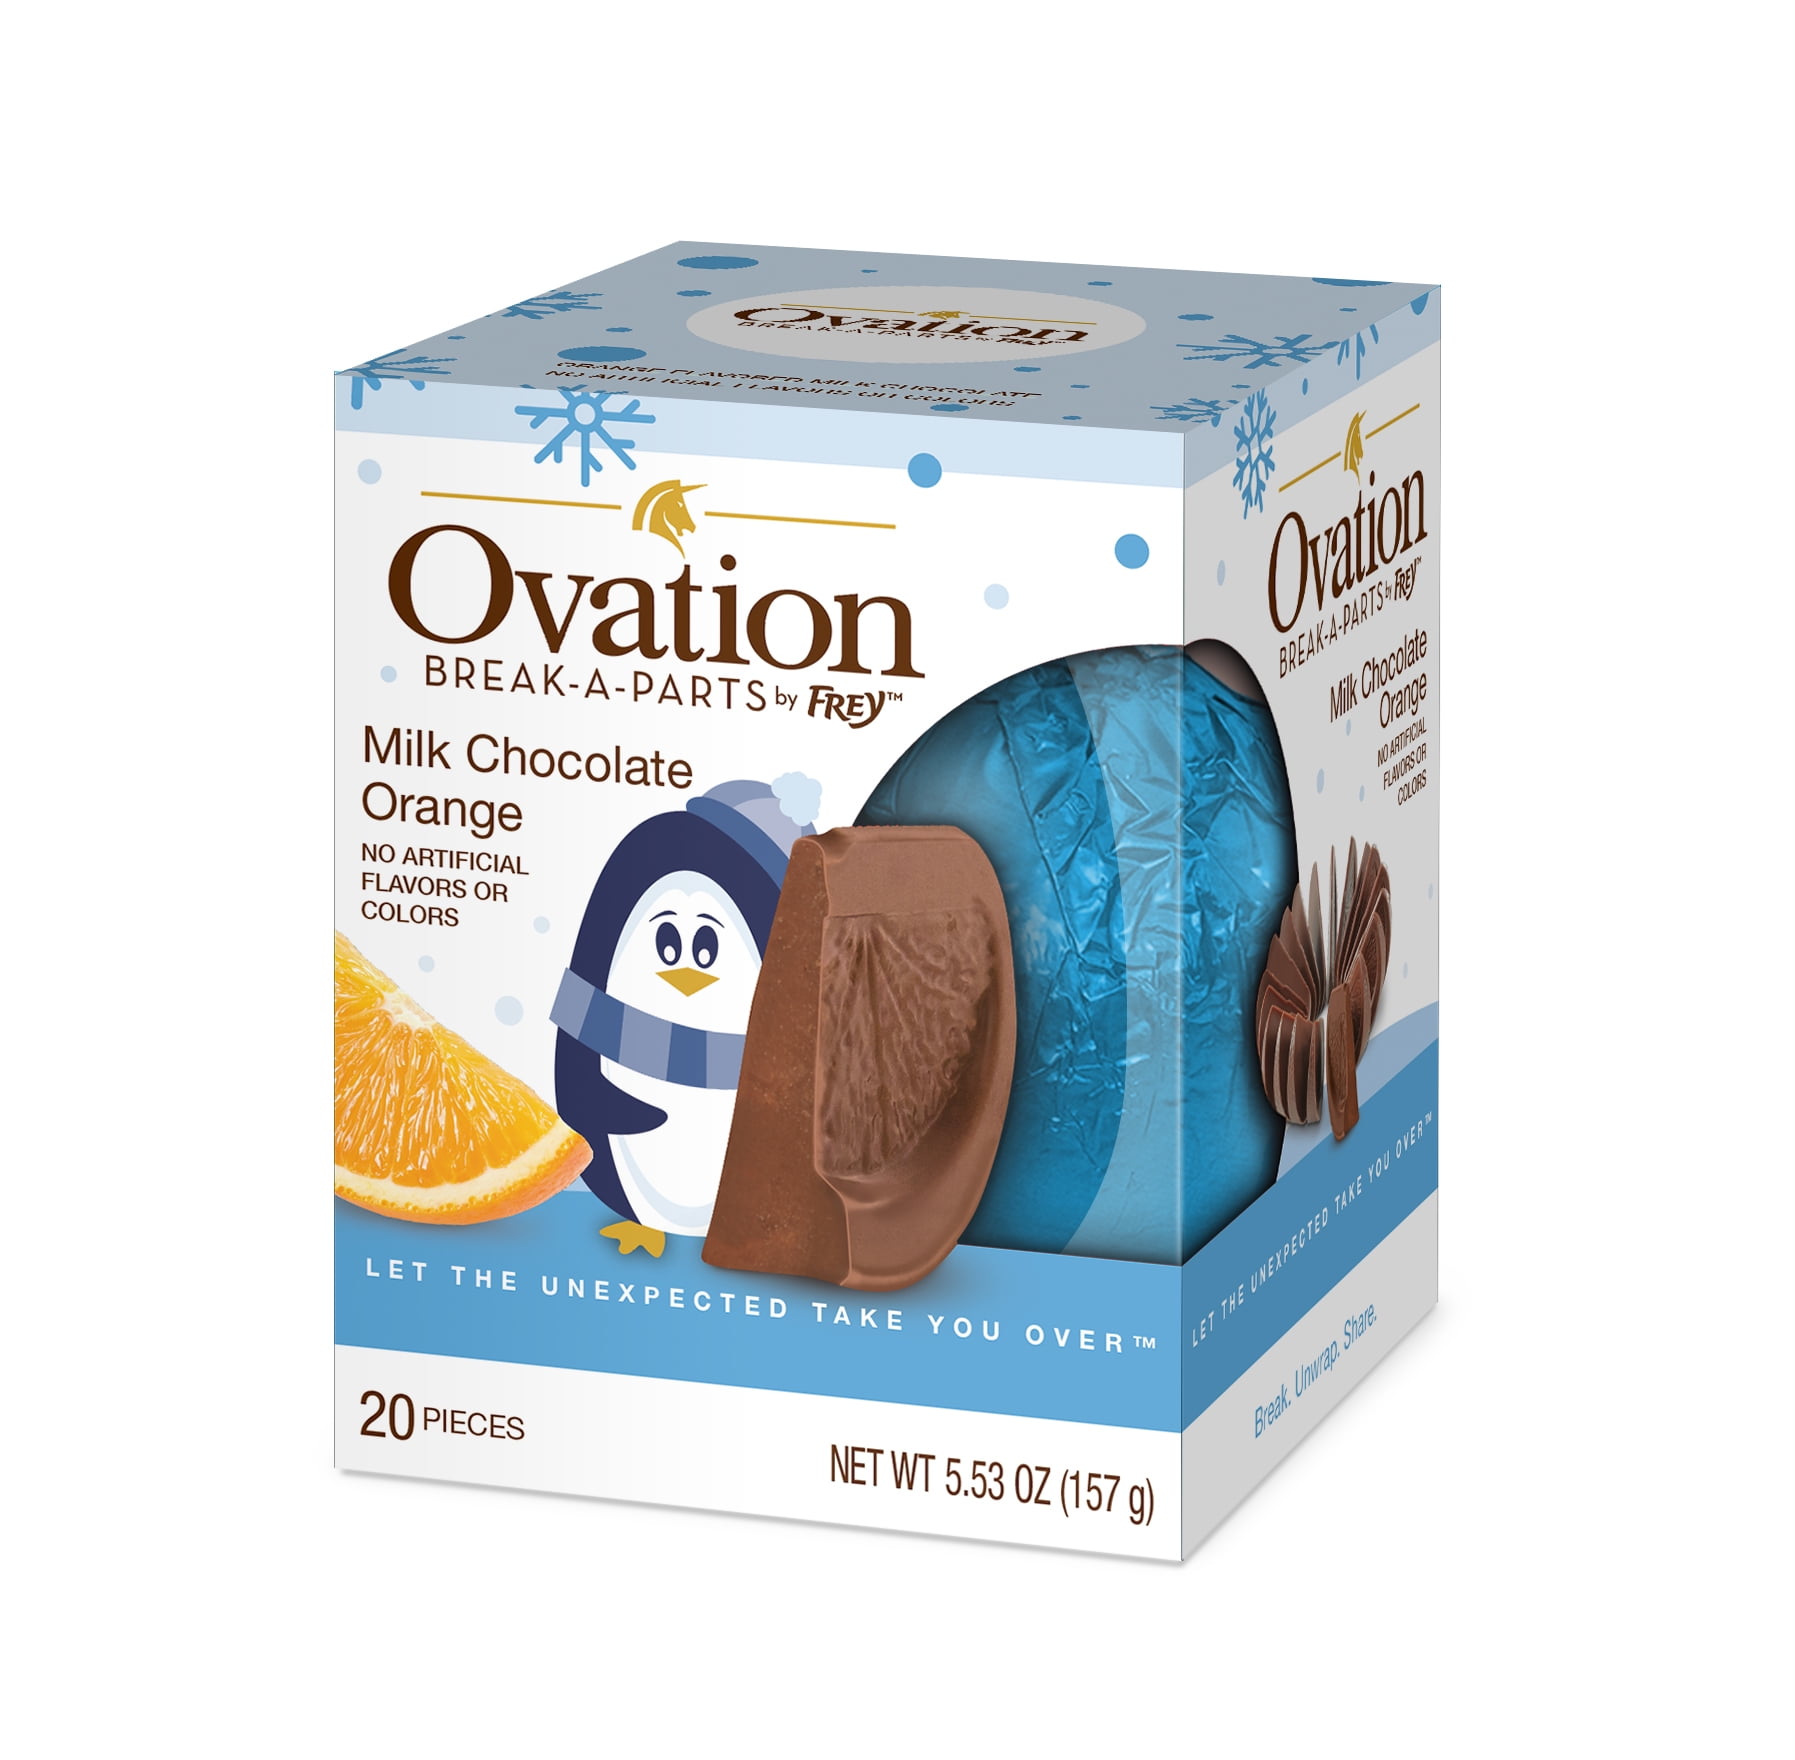 Ovation Break-a-Parts, Milk Chocolate Orange, 5.53 oz, 20 Pieces